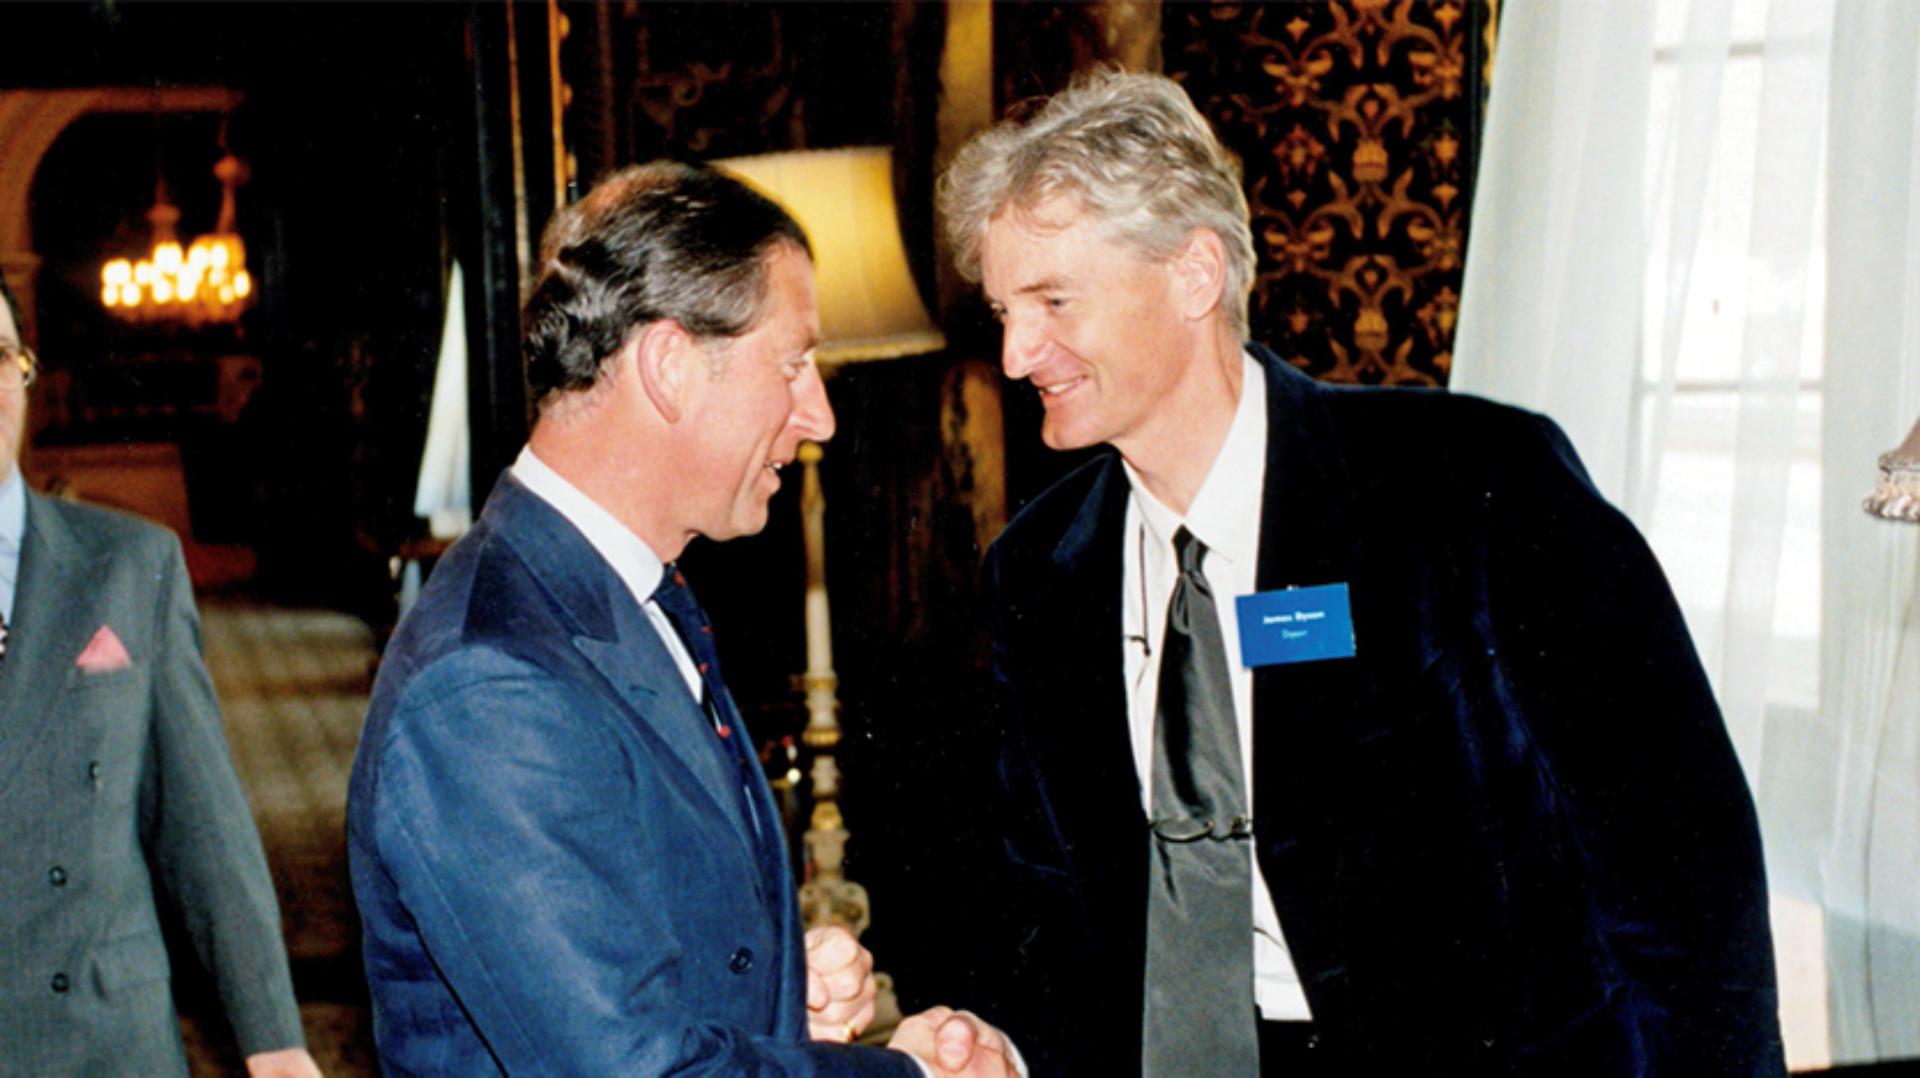 James Dyson meeting HRH Prince Charles